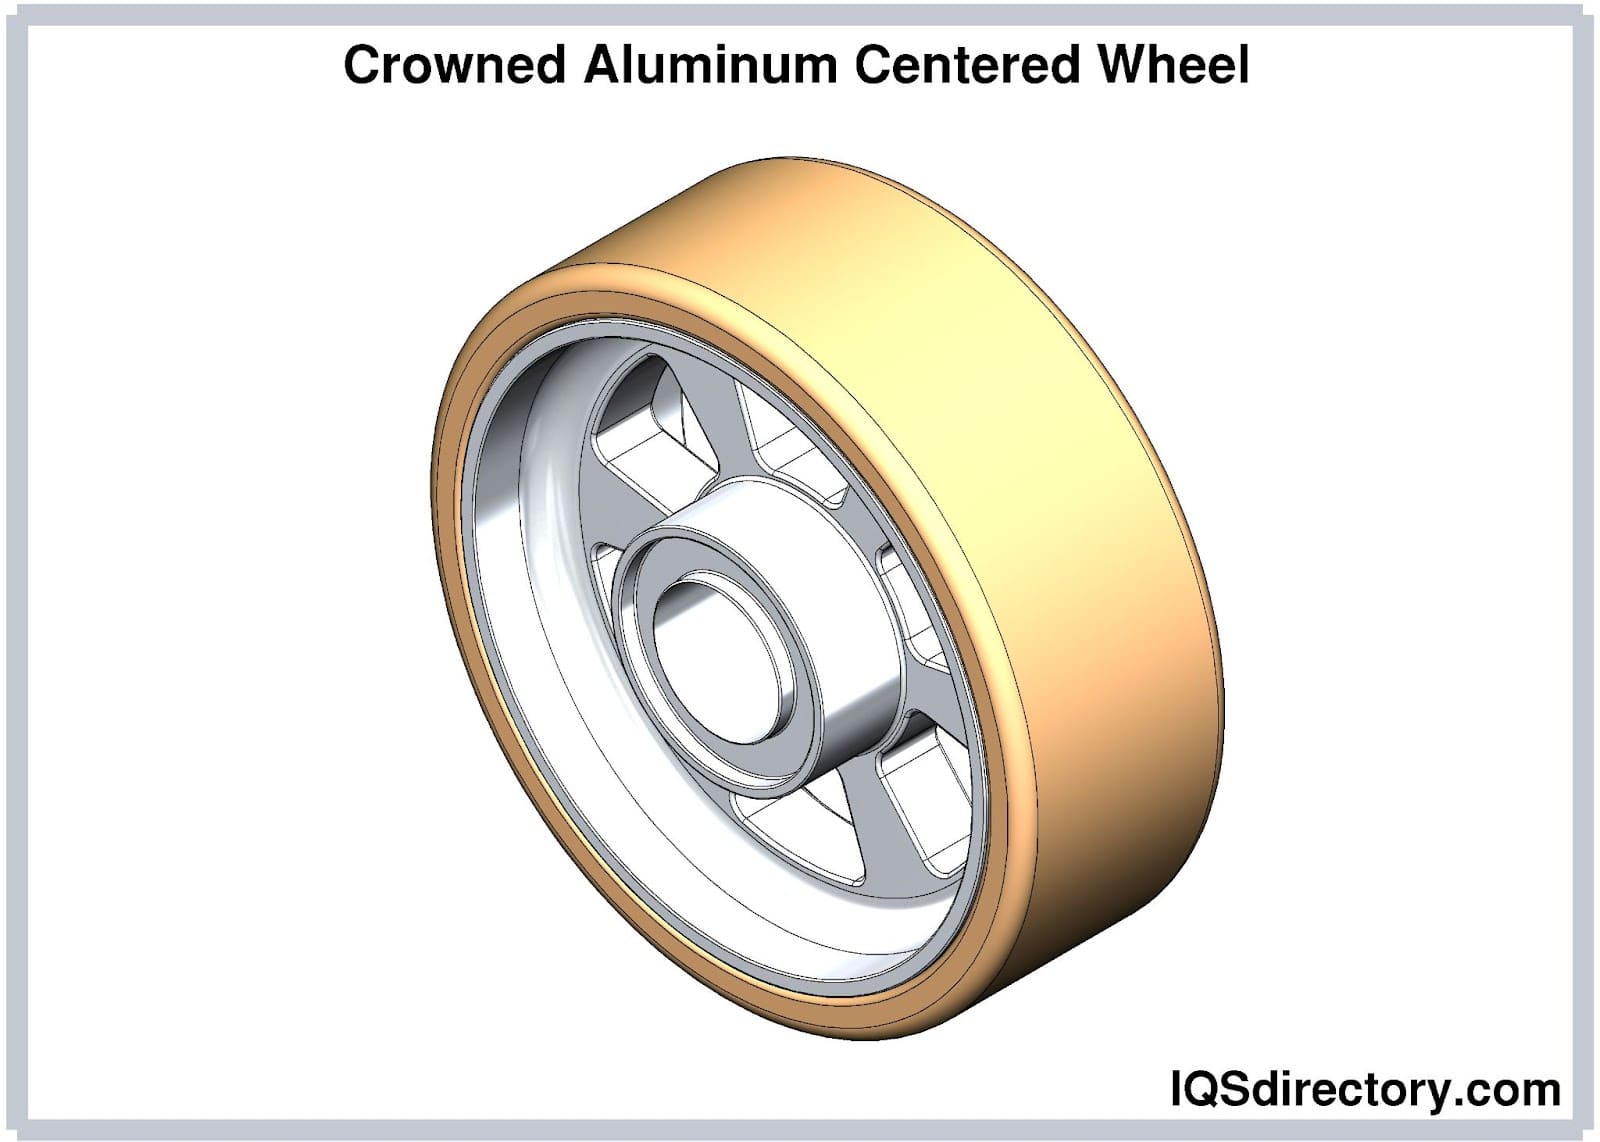 Crowned Aluminum Centered Wheel